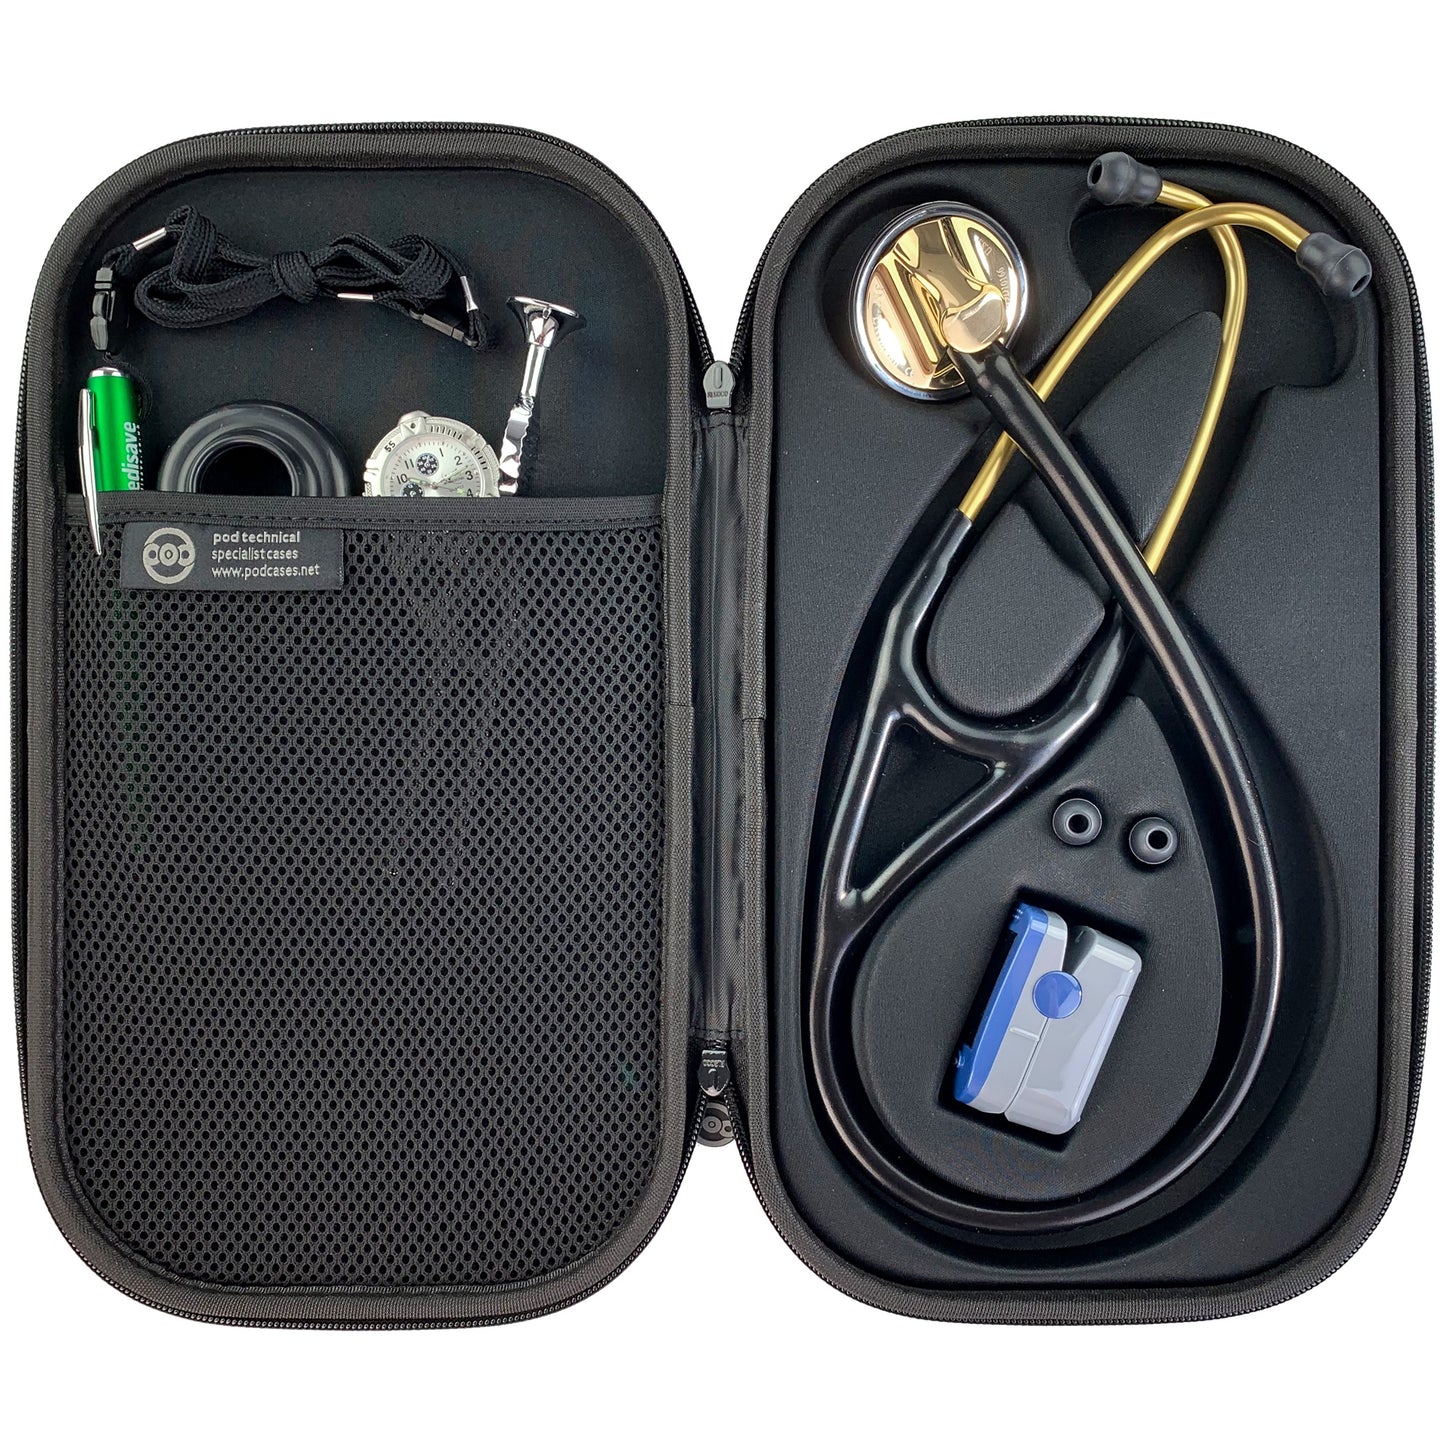 Pod Technical Cardiopod II Stethoscope Case for all Littmann Stethoscopes - Smoke